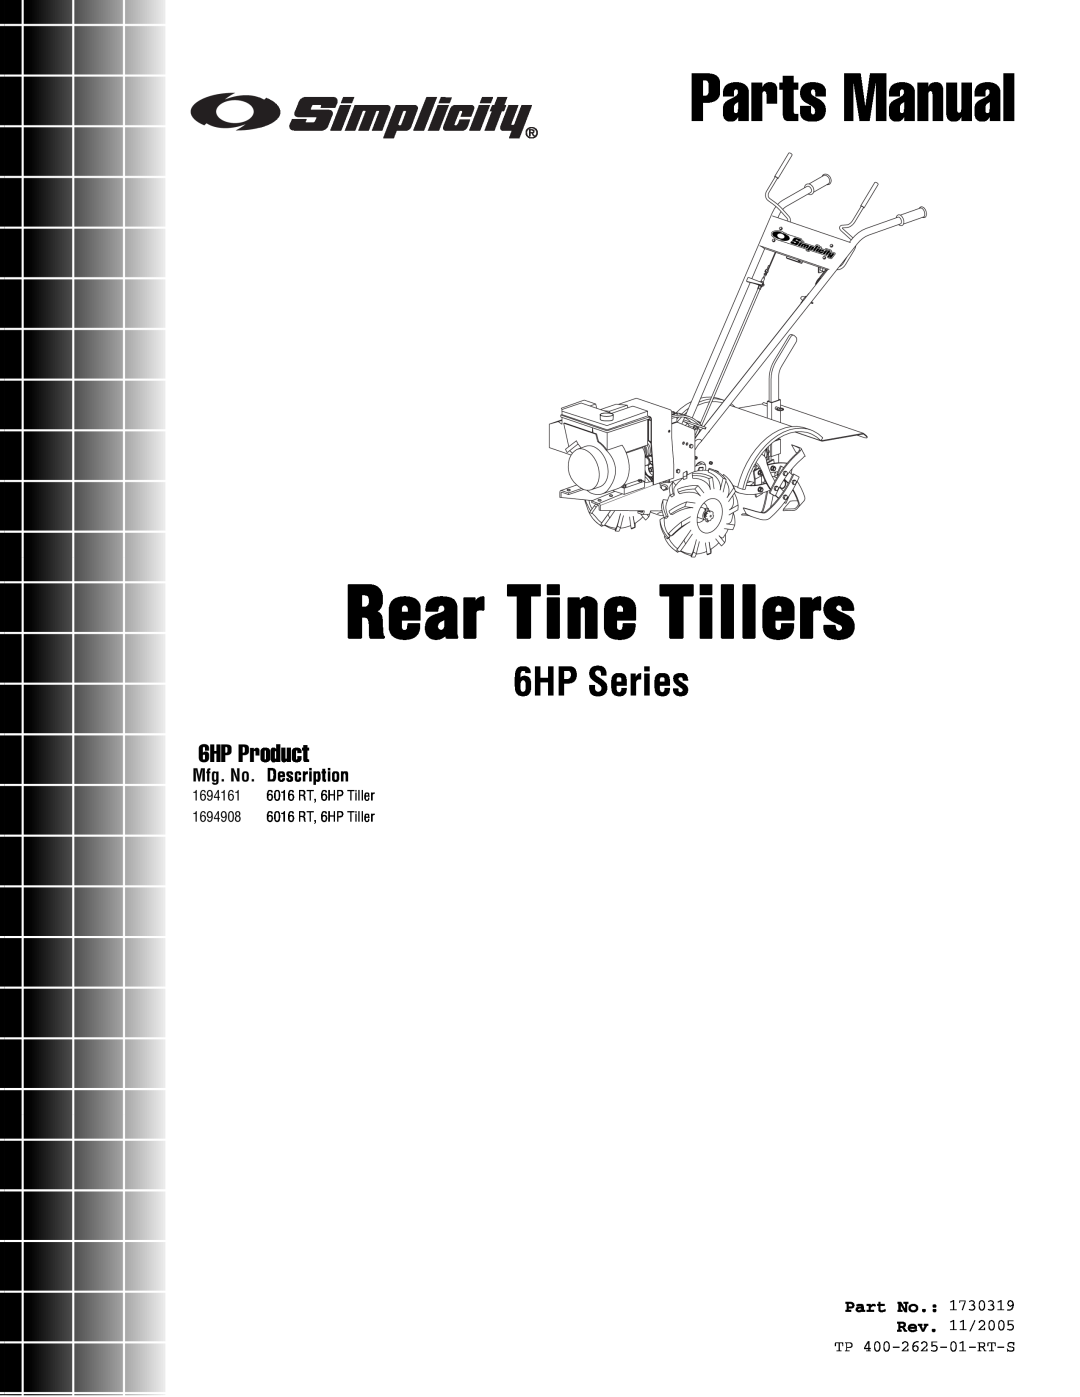 Simplicity 1730319, 1694161 manual Mfg. No. Description, Rev. 11/2005 TP 400-2625-01-RT-S, Rear Tine Tillers, Parts Manual 